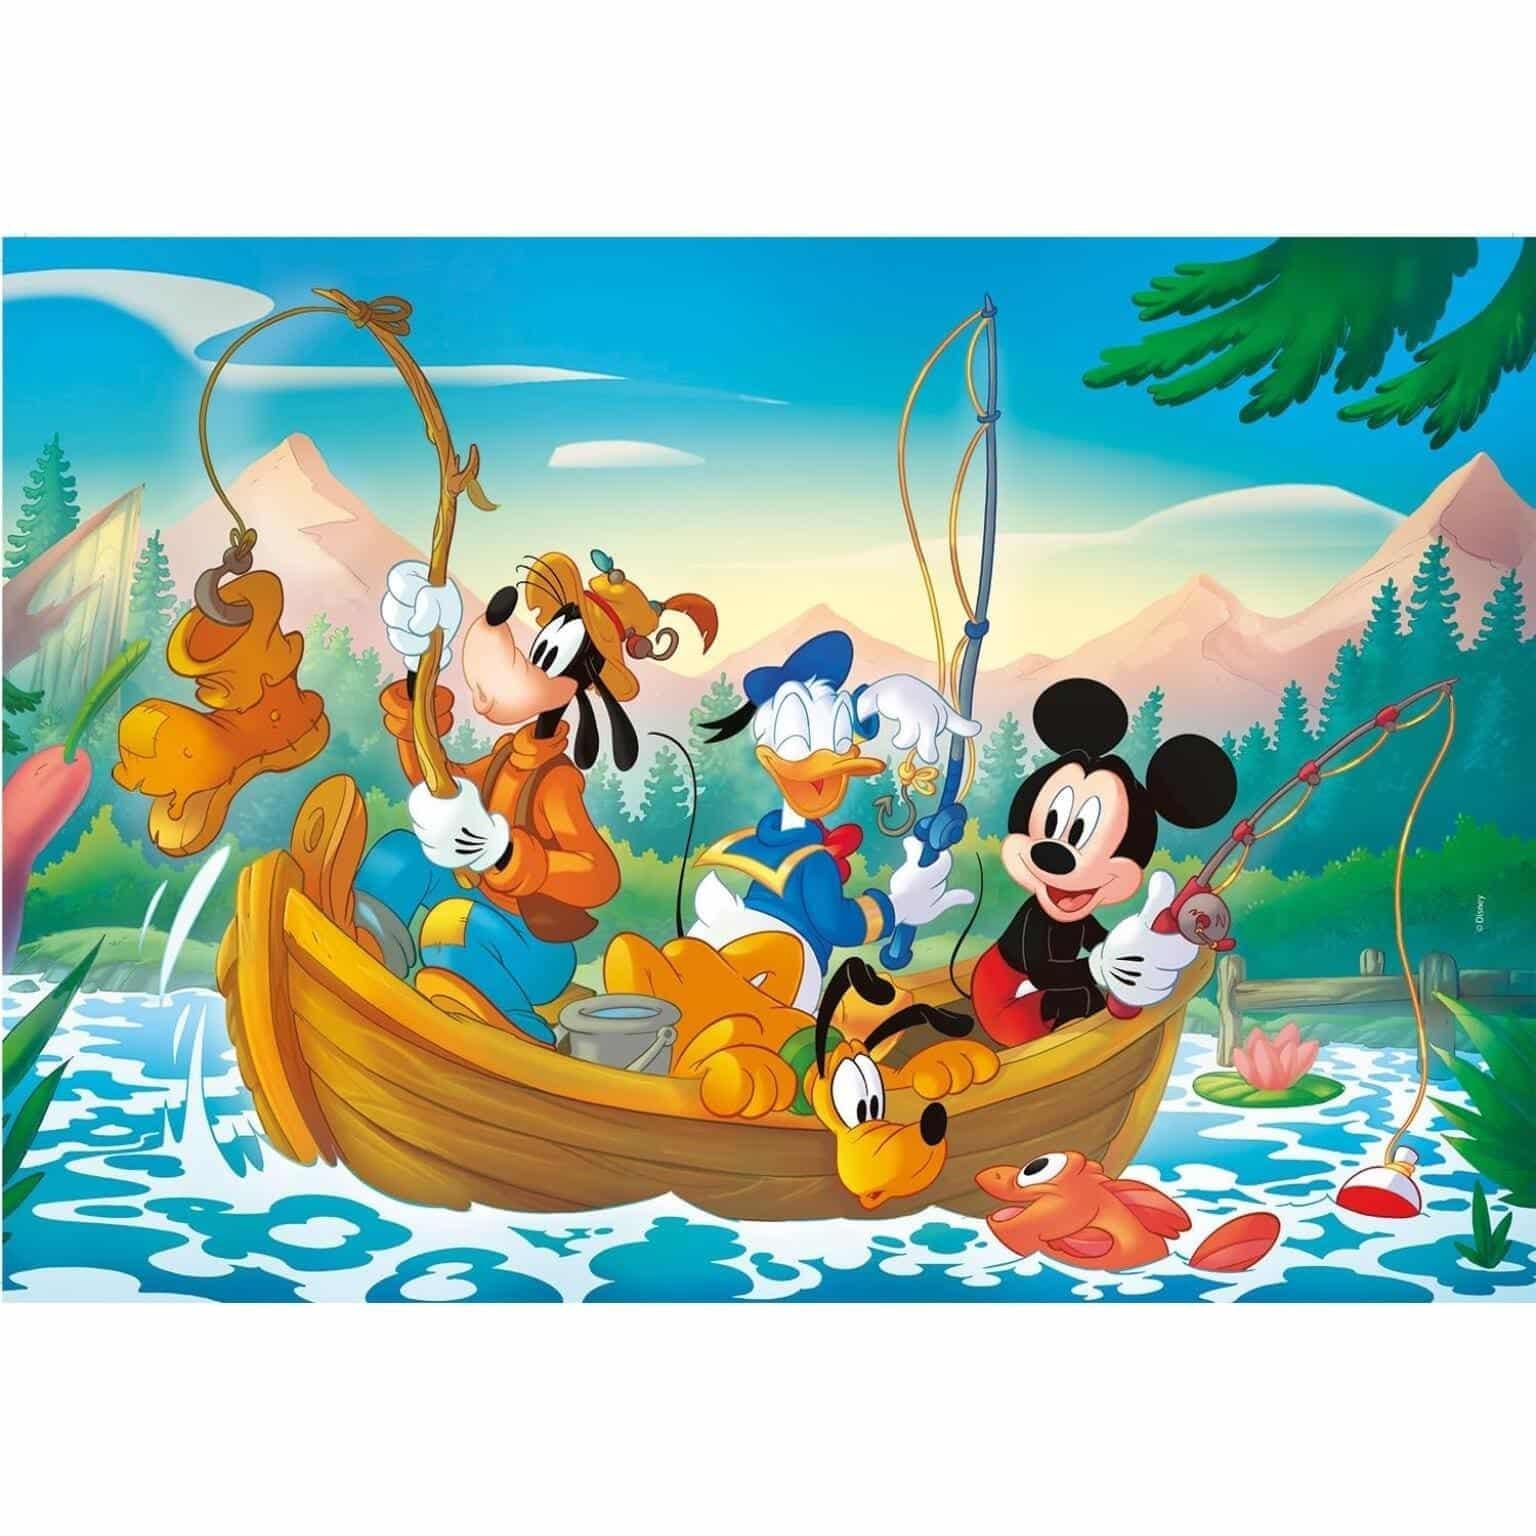 Puzzle Disney Mickey e amigos 3 x 48 pçs - Brincatoys